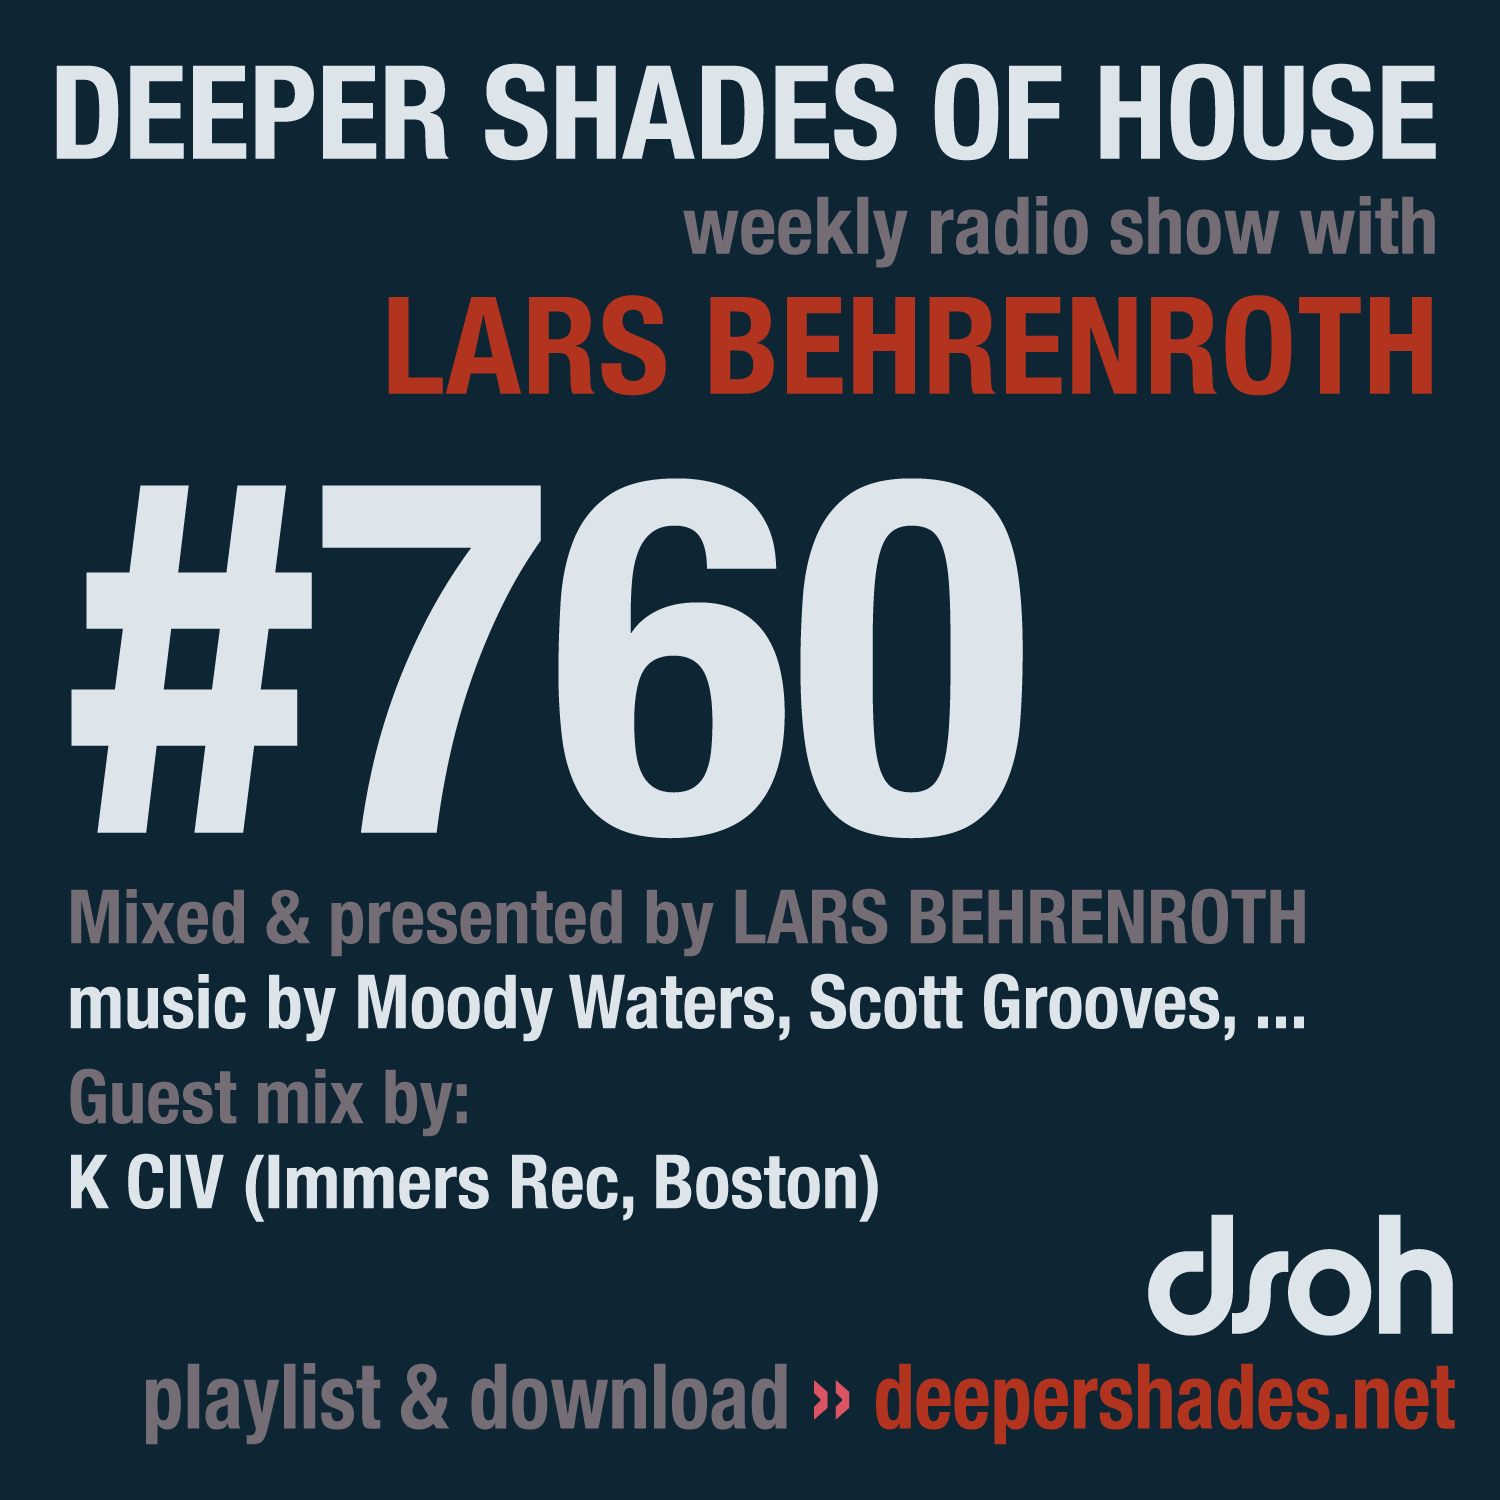 Deep House Radio Show Deeper Shades Of House 760